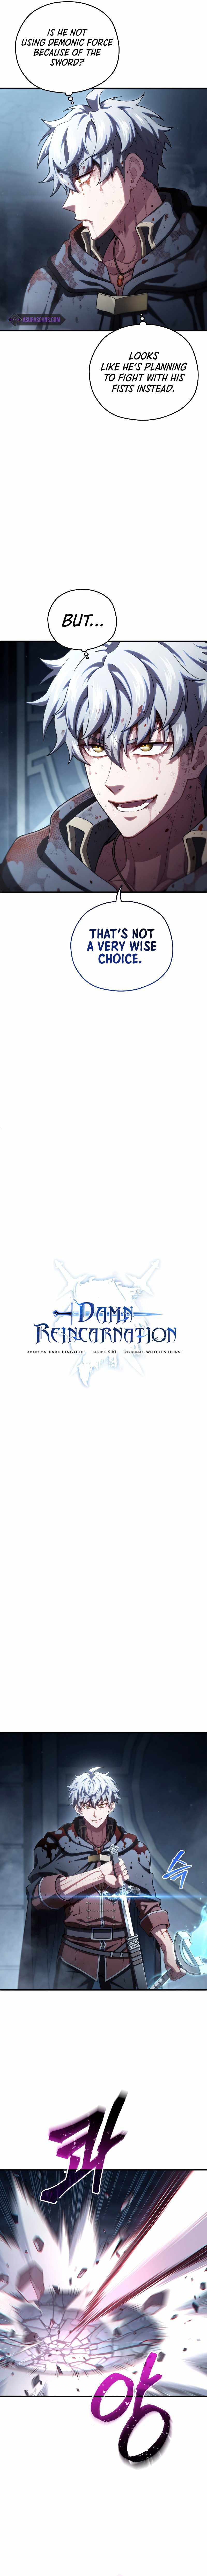 Damn Reincarnation Chapter 63-eng-li - Page 3